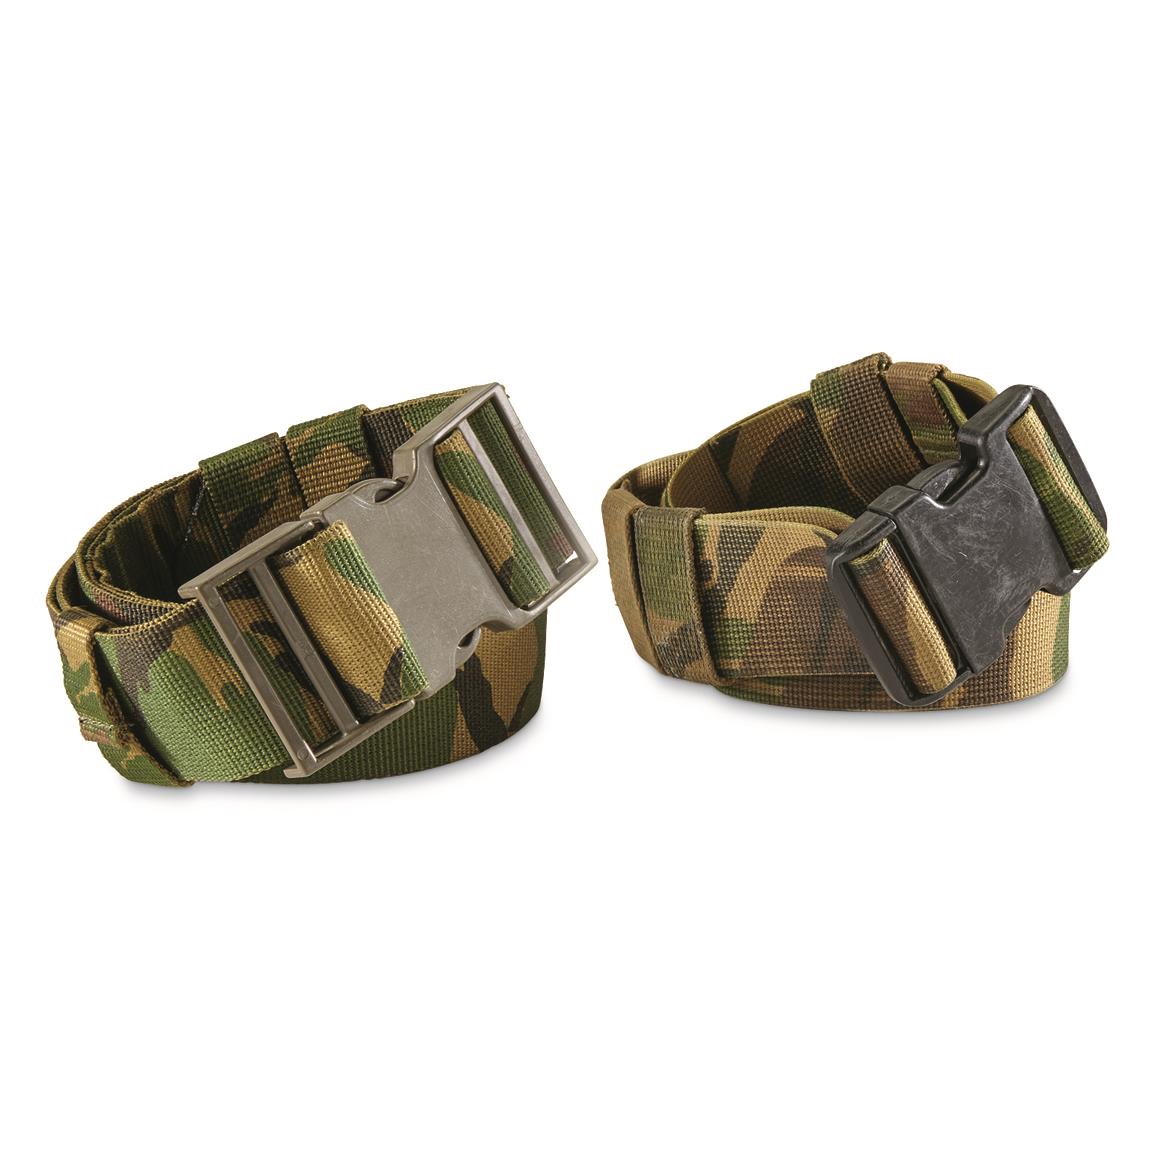 Dutch Military Surplus DPM Camo Combat Belts, 2 Pack, Used, DPM Camo